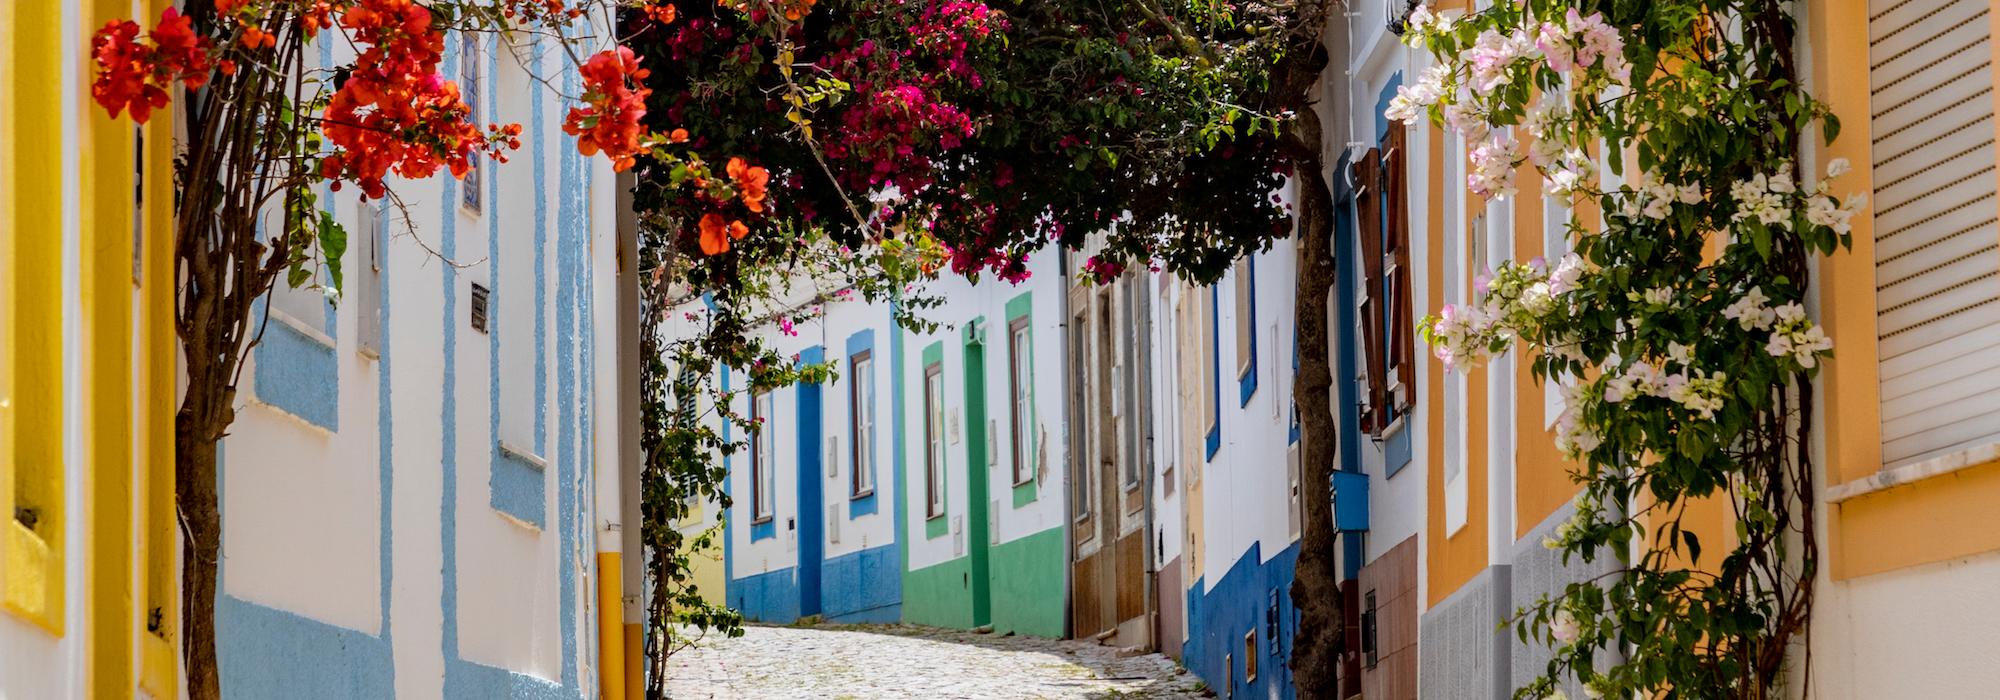 Alleys of Ferragudo, Portugal